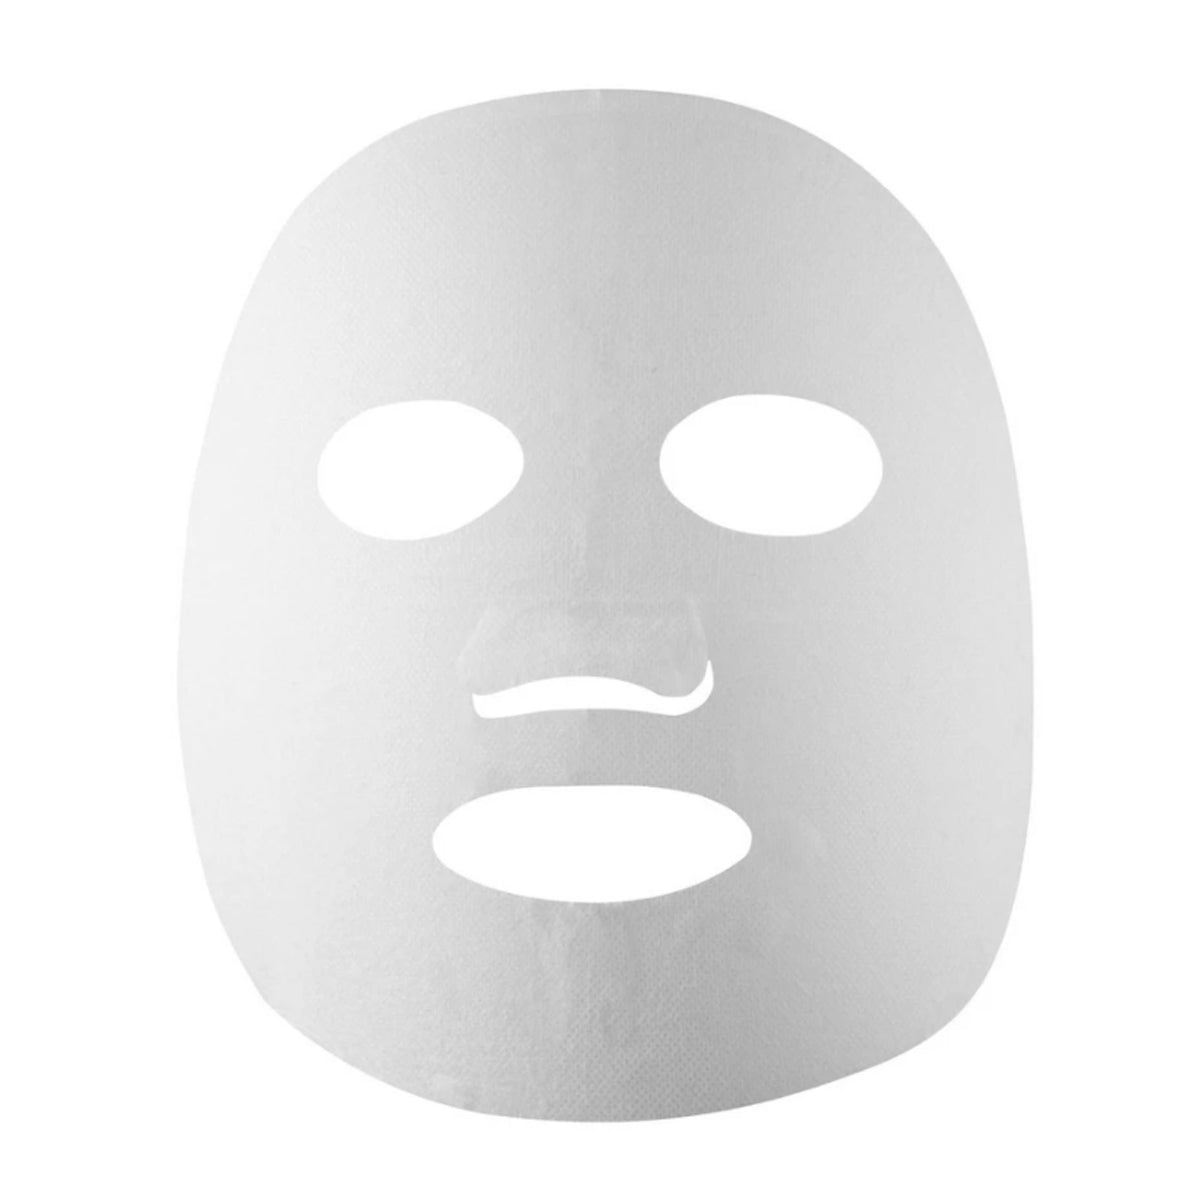 Tonymoly - I Am Broccoli Mask Sheet - 21 gr